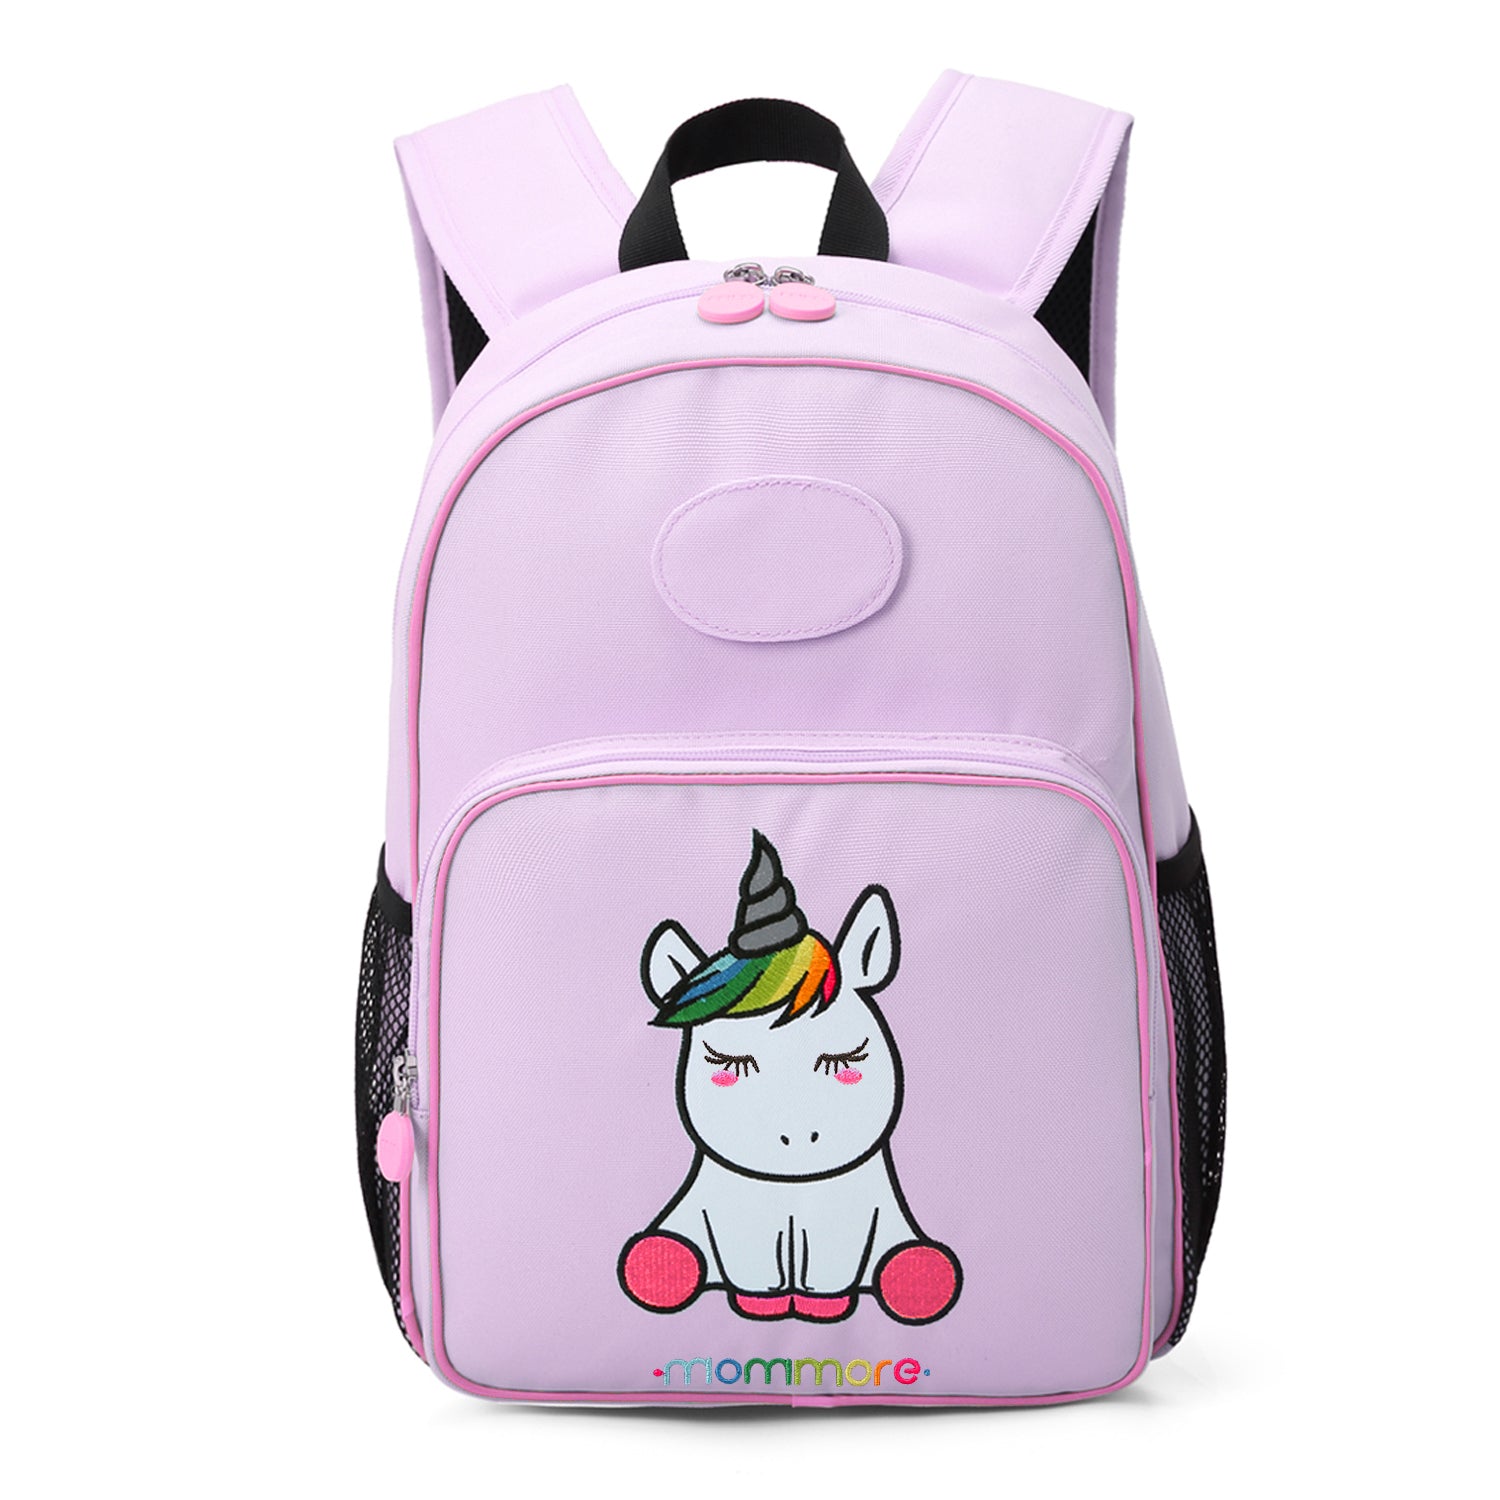 Children's Backpack - So Cute! UNICORN 